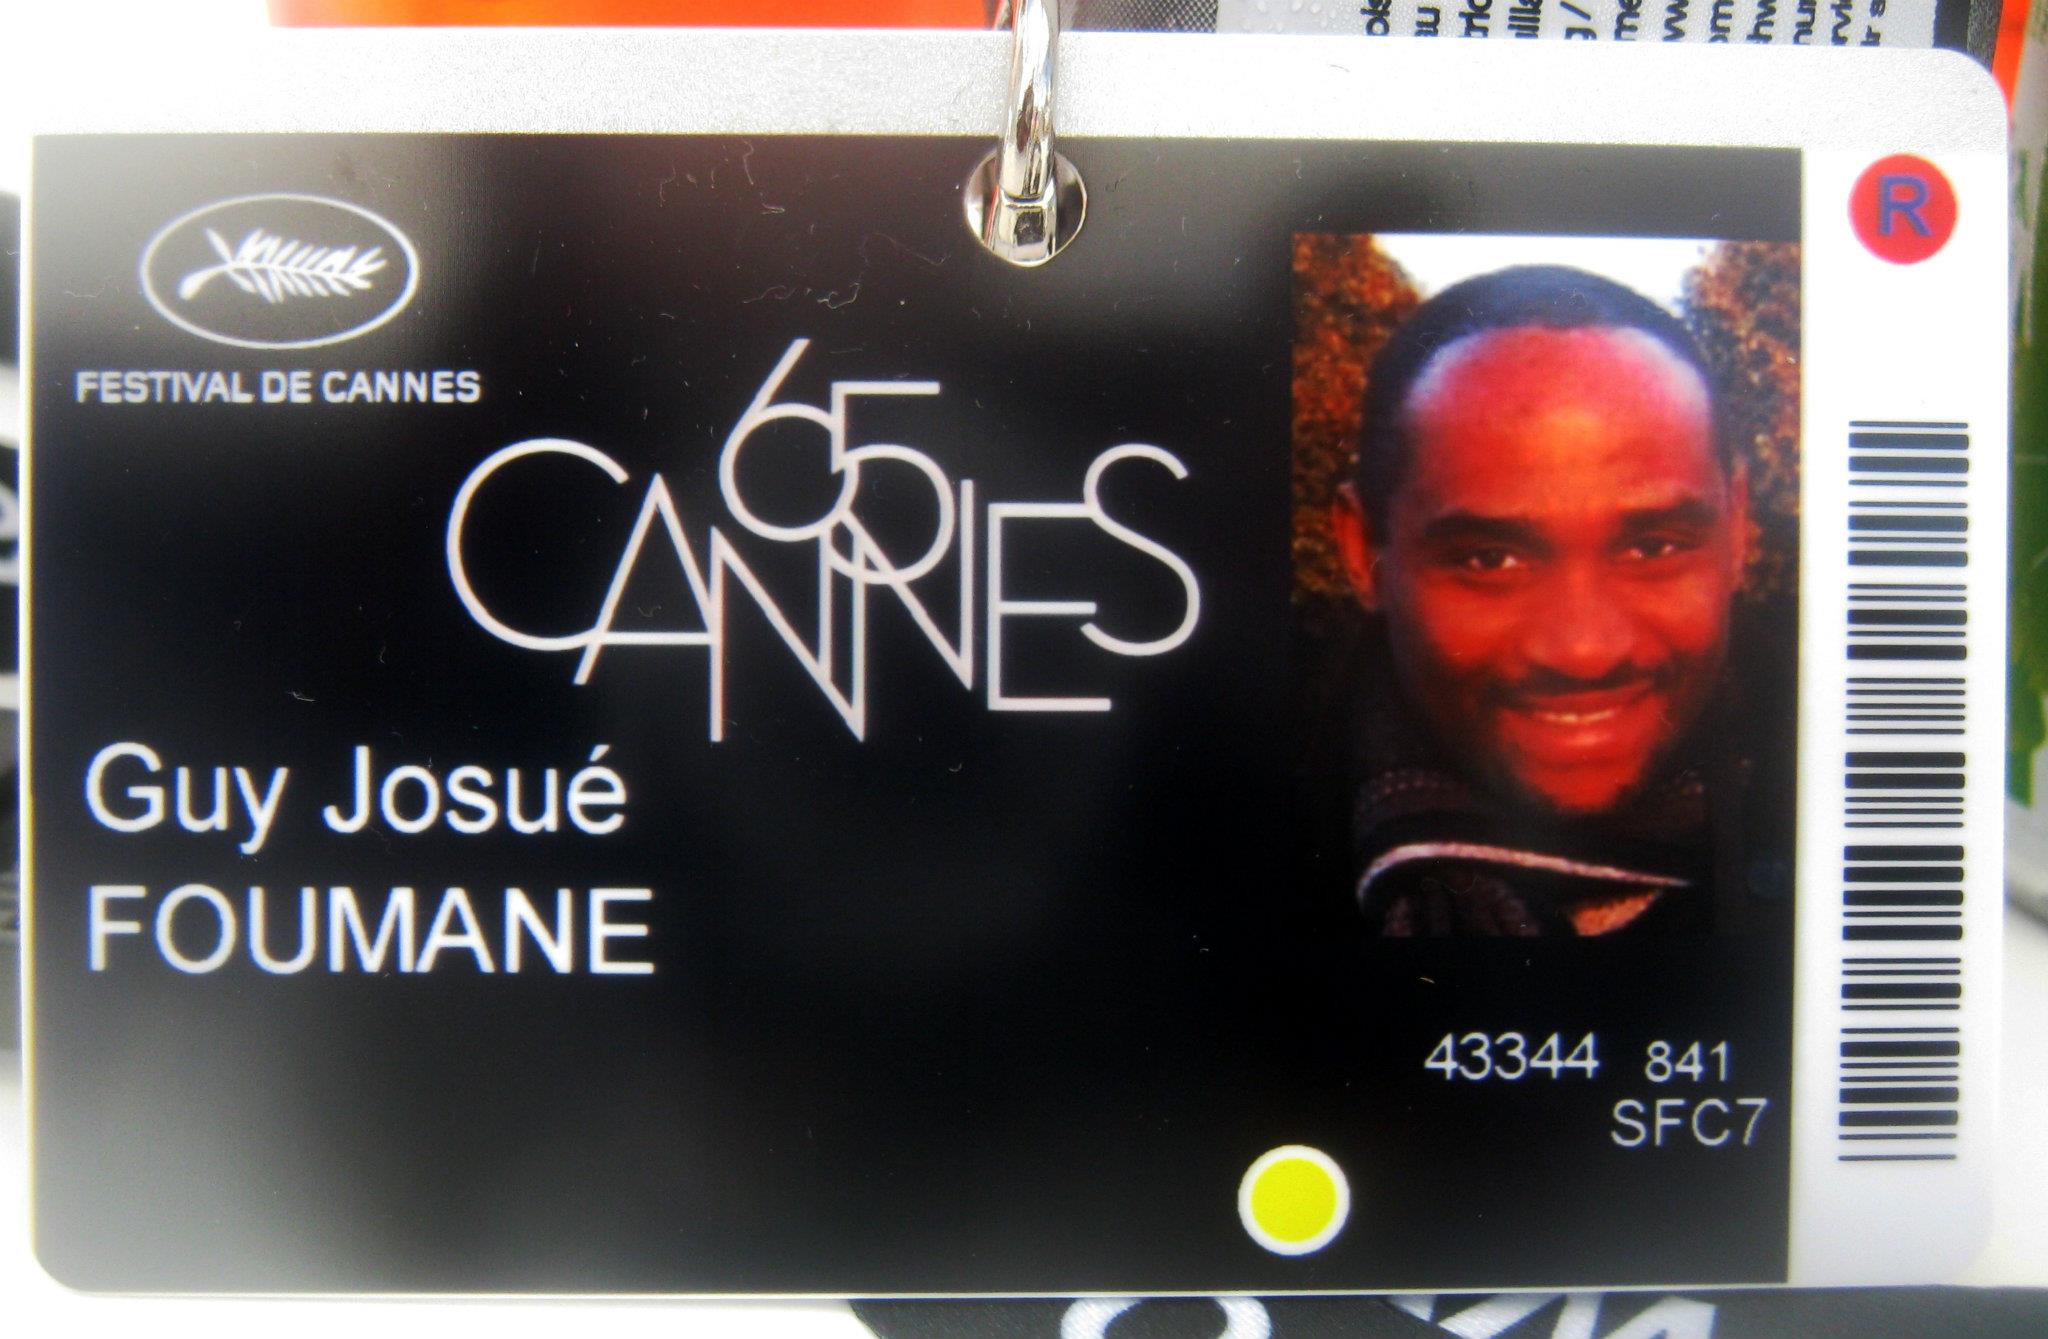 International Cannes Film Festival (France)